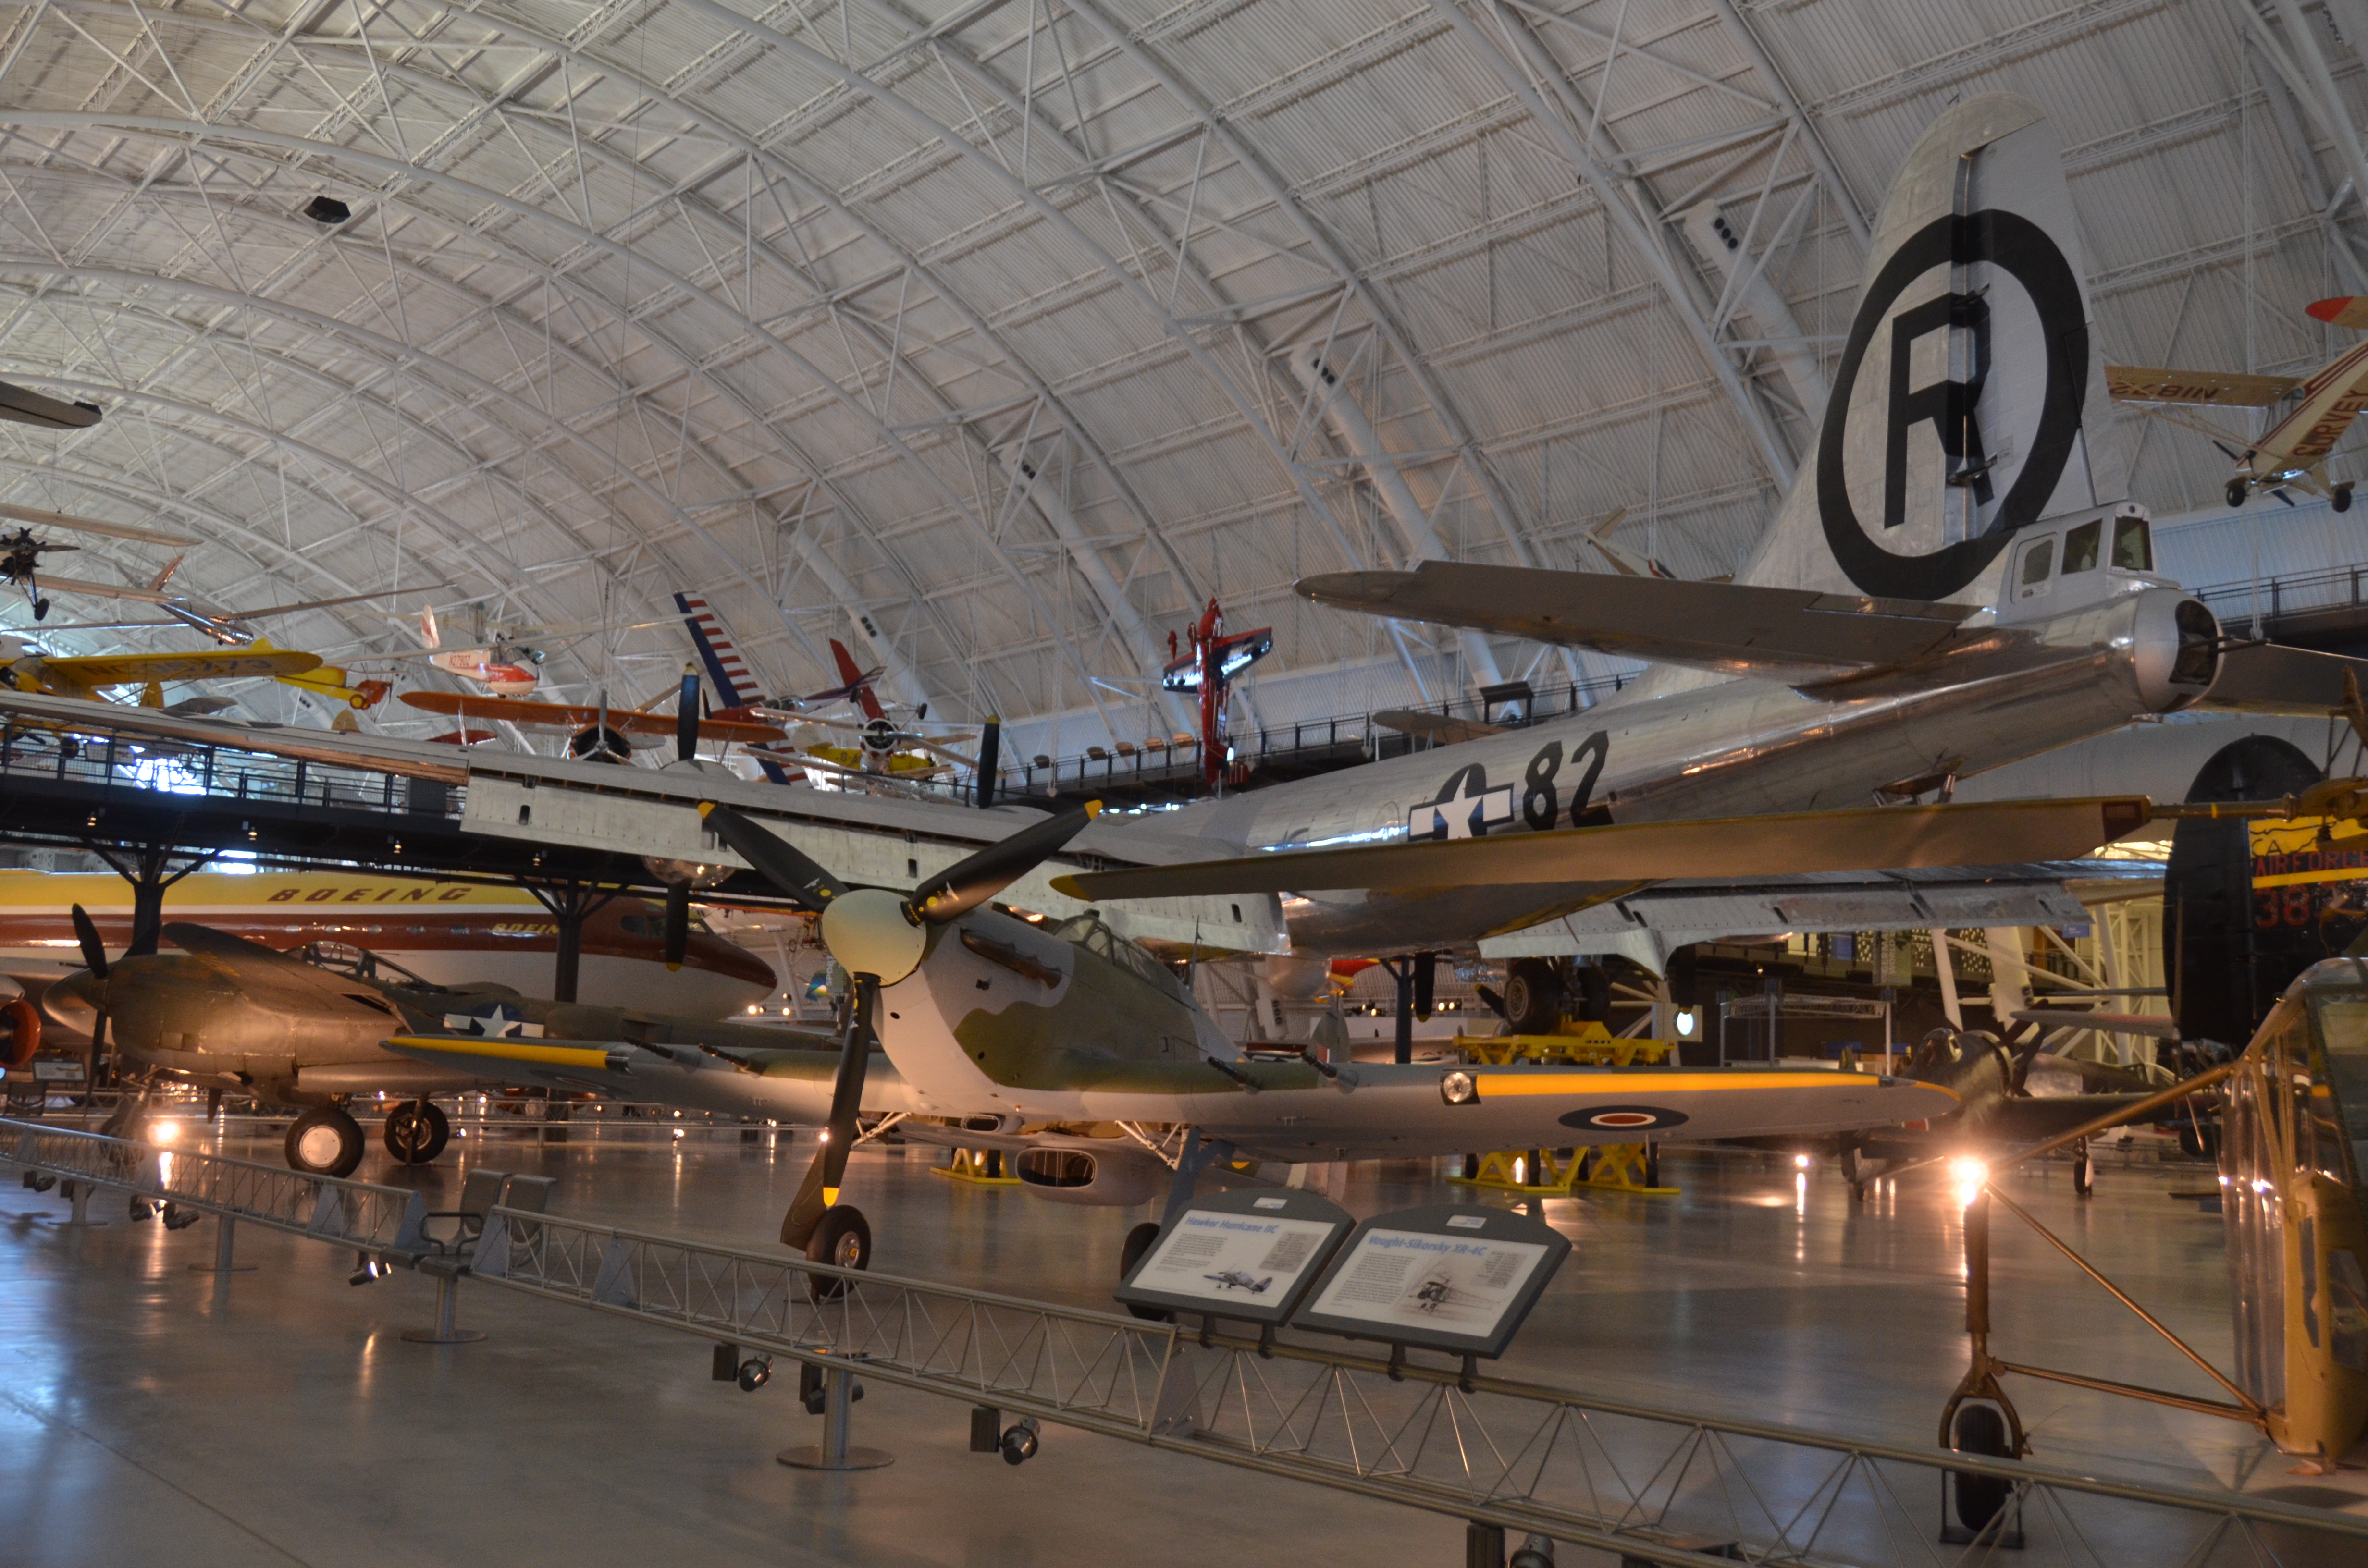 Steven F. Udvar-Hazy Center: British Hawker Hurricane, with P-38 Lightning and B-29 Enola Gay behind it